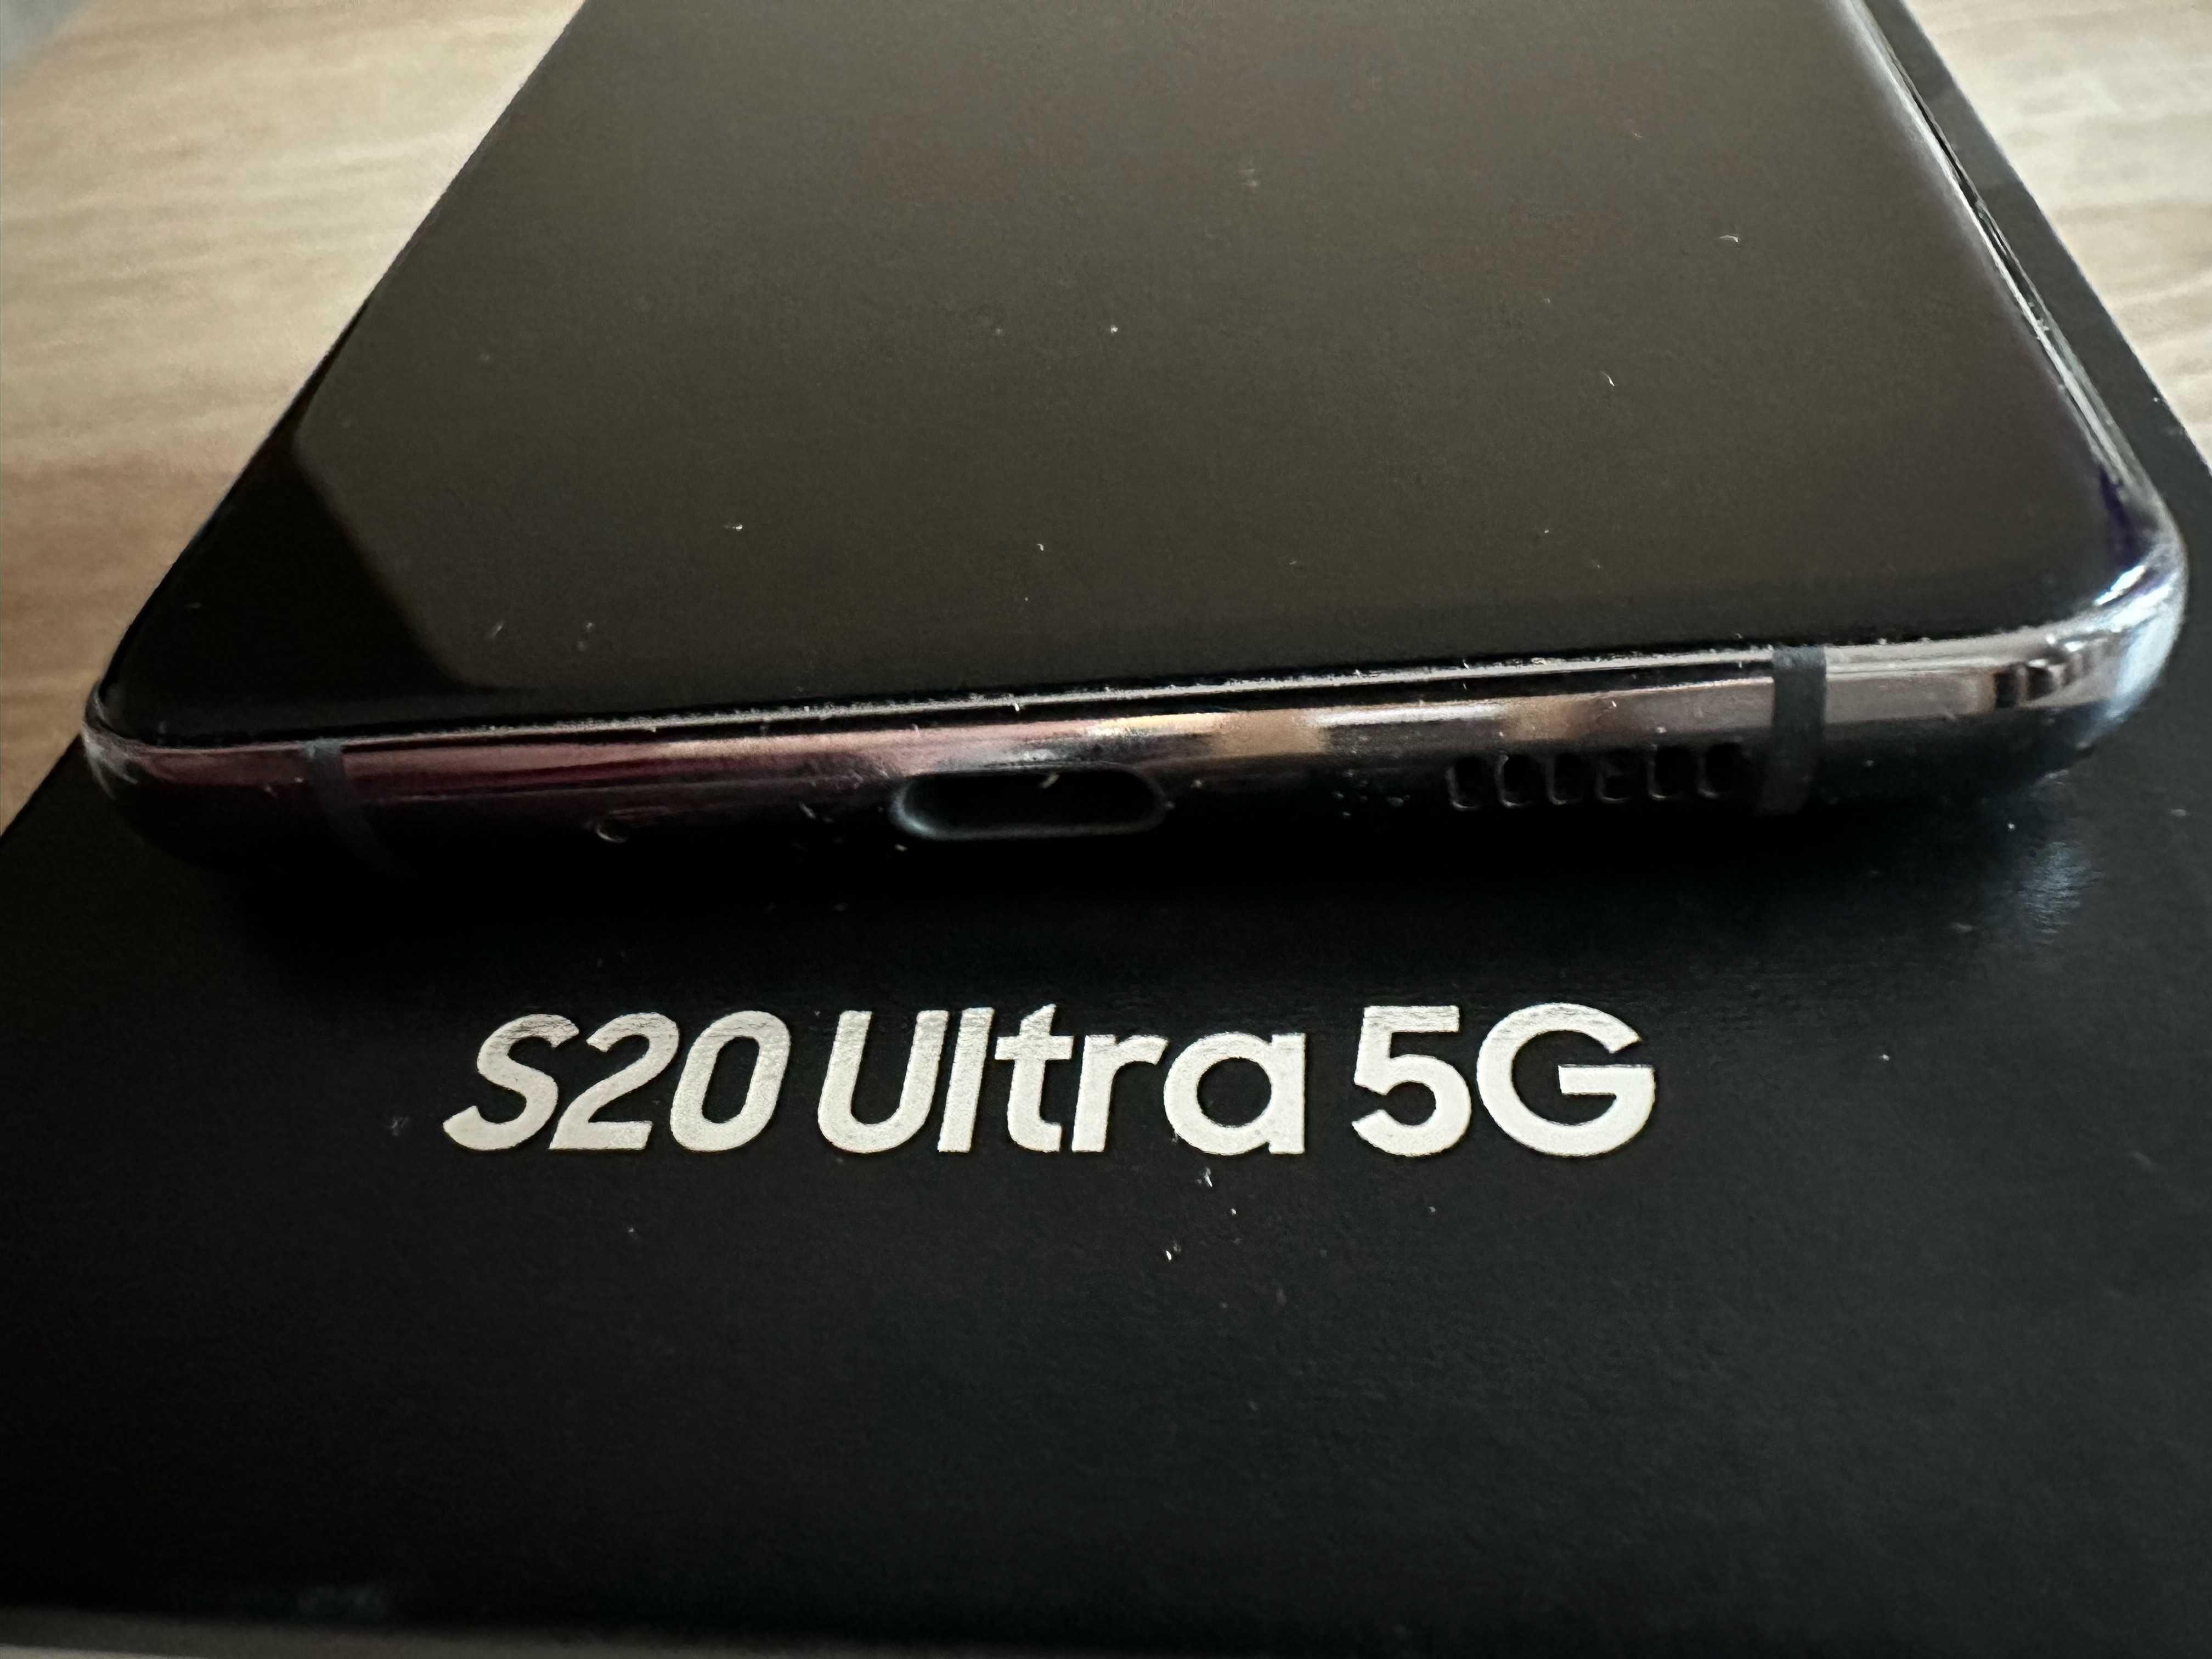 Samsung S20 ULTRA 5G!